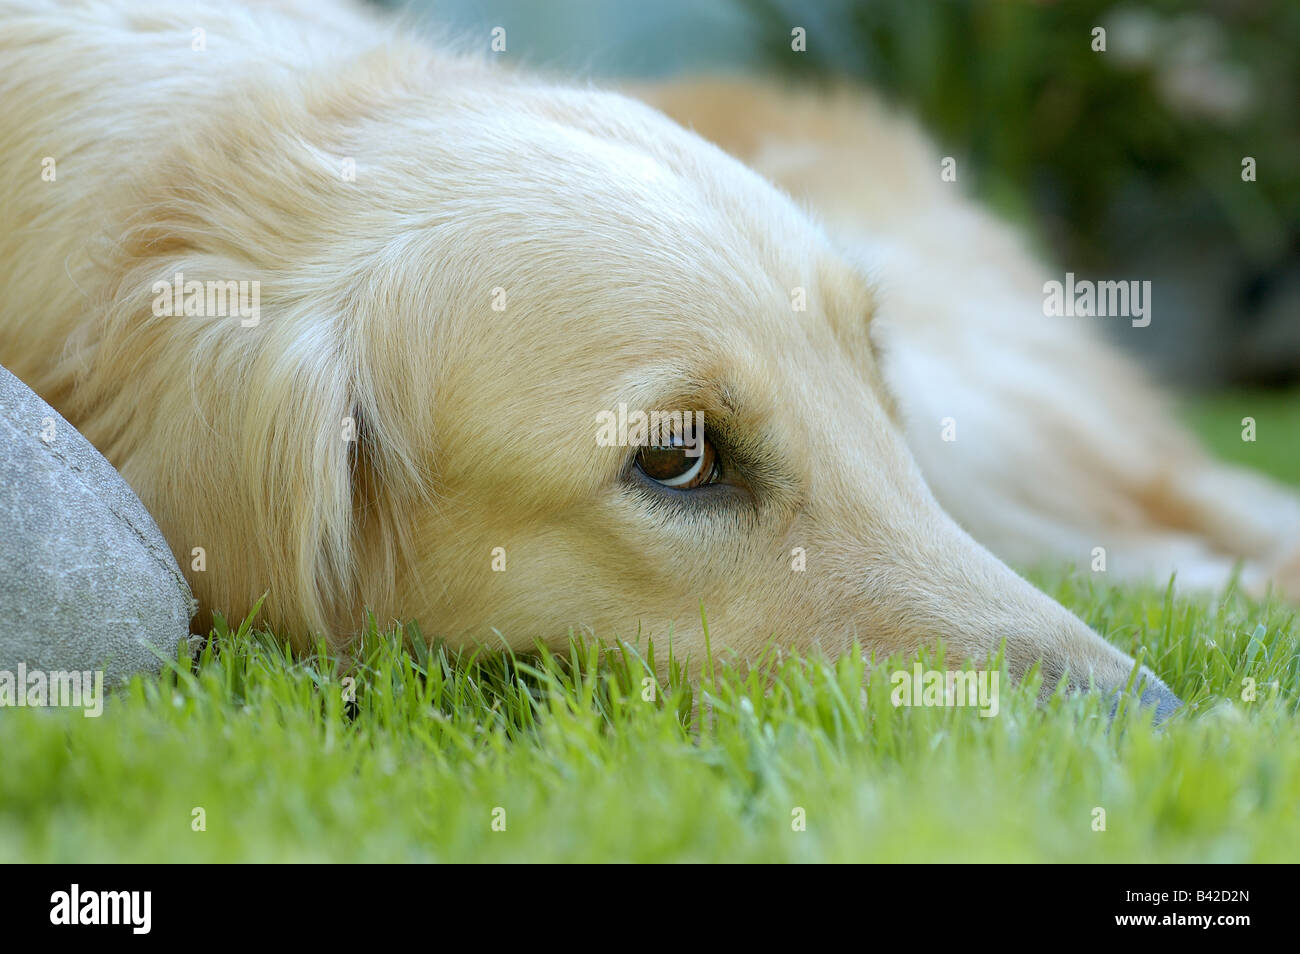 A sad dog liying on the grass Stock Photo